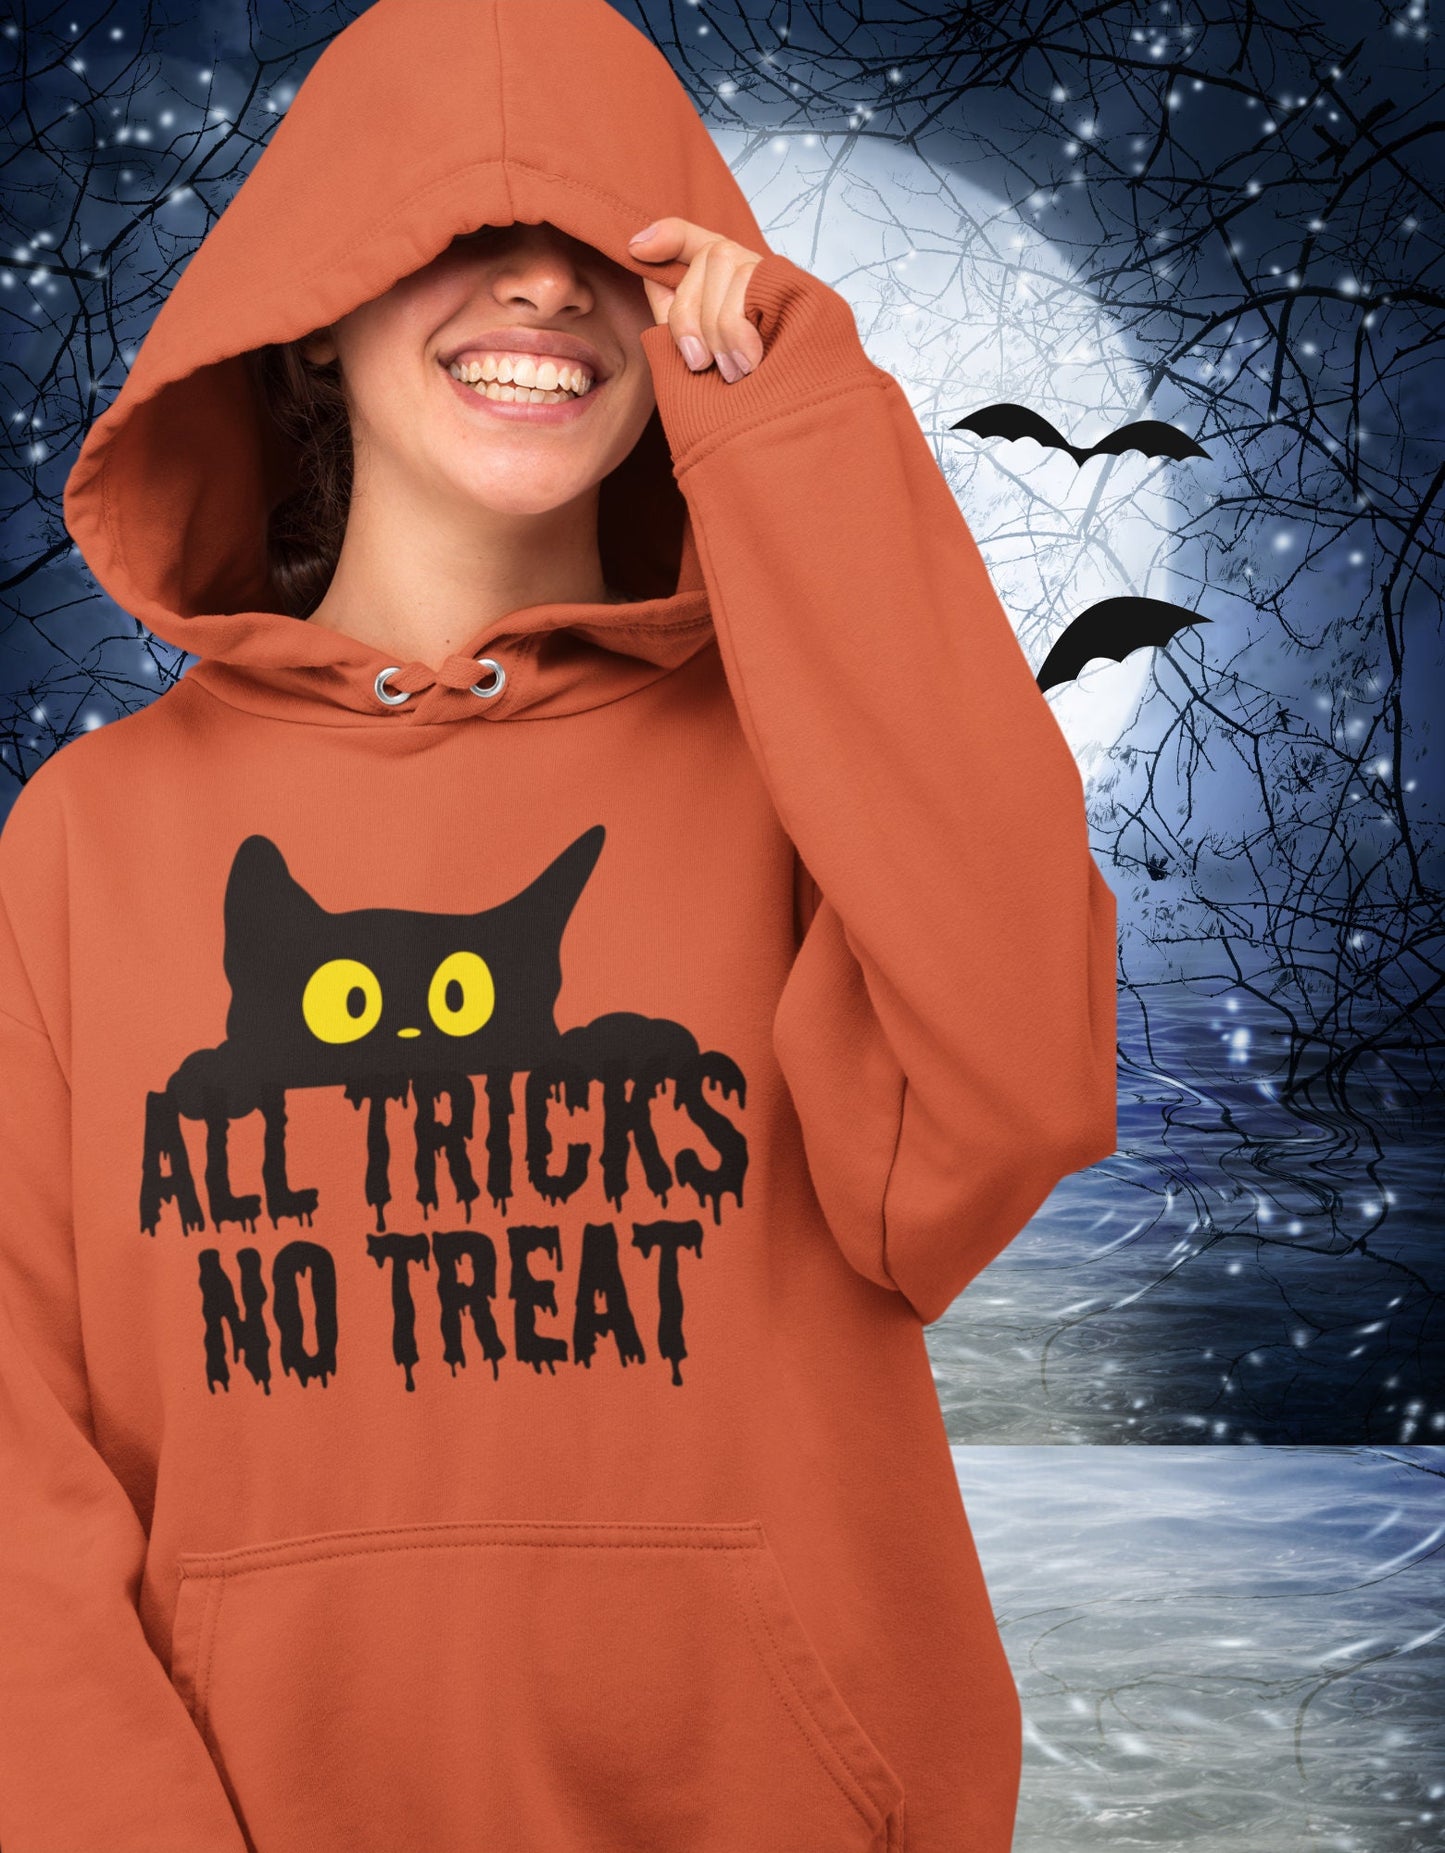 Halloween hoodie pullover sweatshirt PLUS BONUS GIFT/peeking black cat sweater/present for him or her, teacher, pet lover, vet tech, mom dad